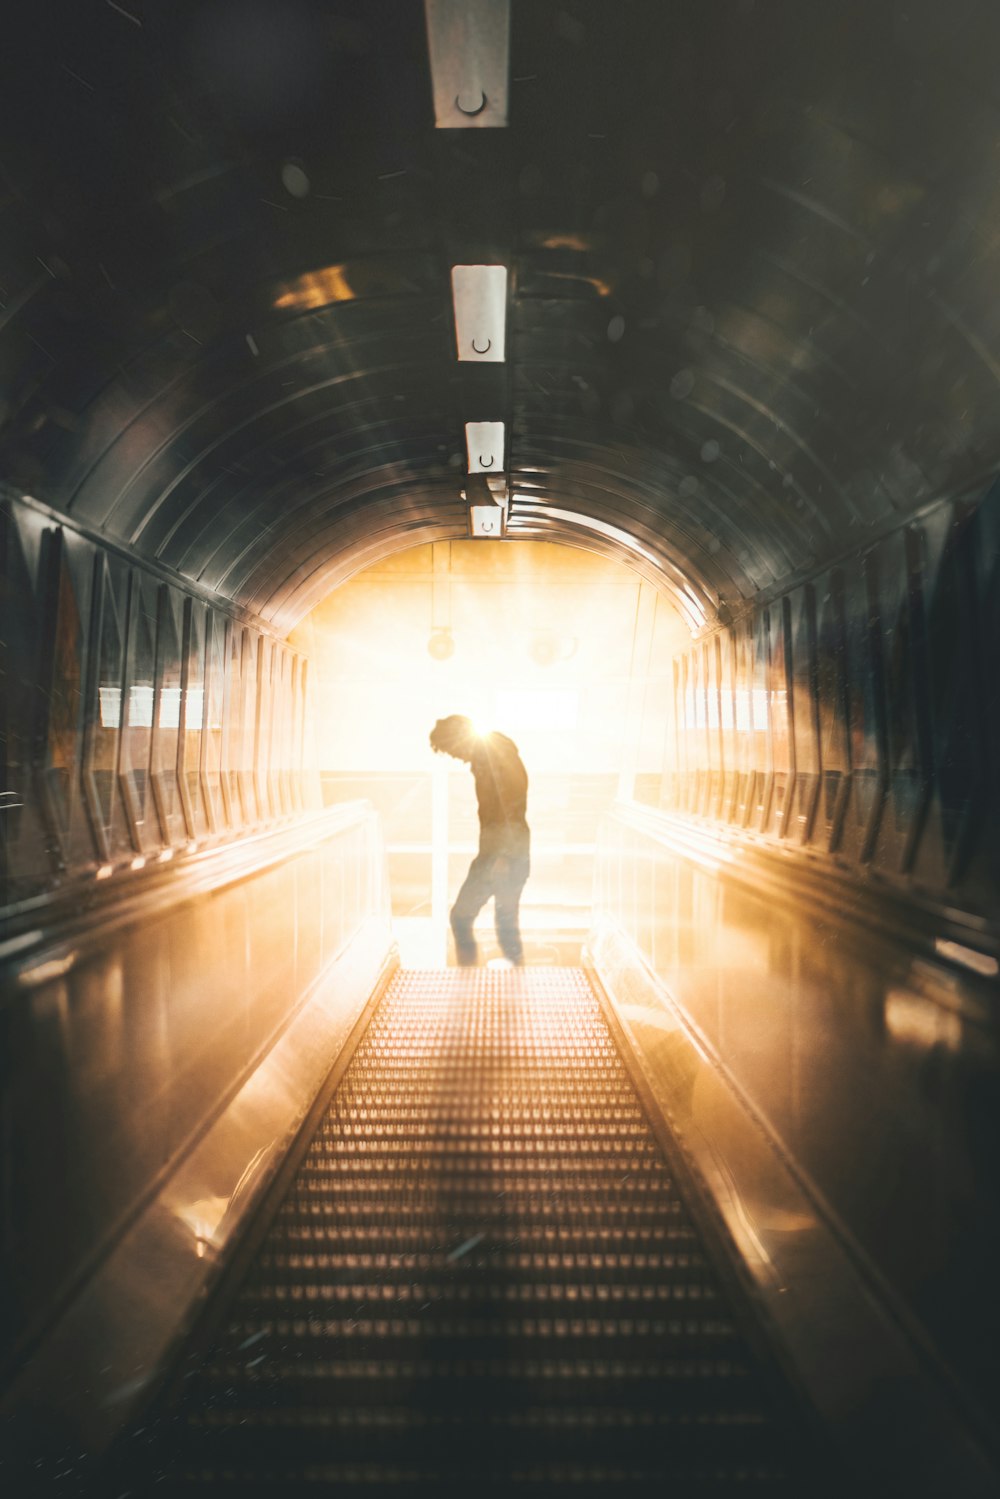 a man is walking down an escalator in a tunnel